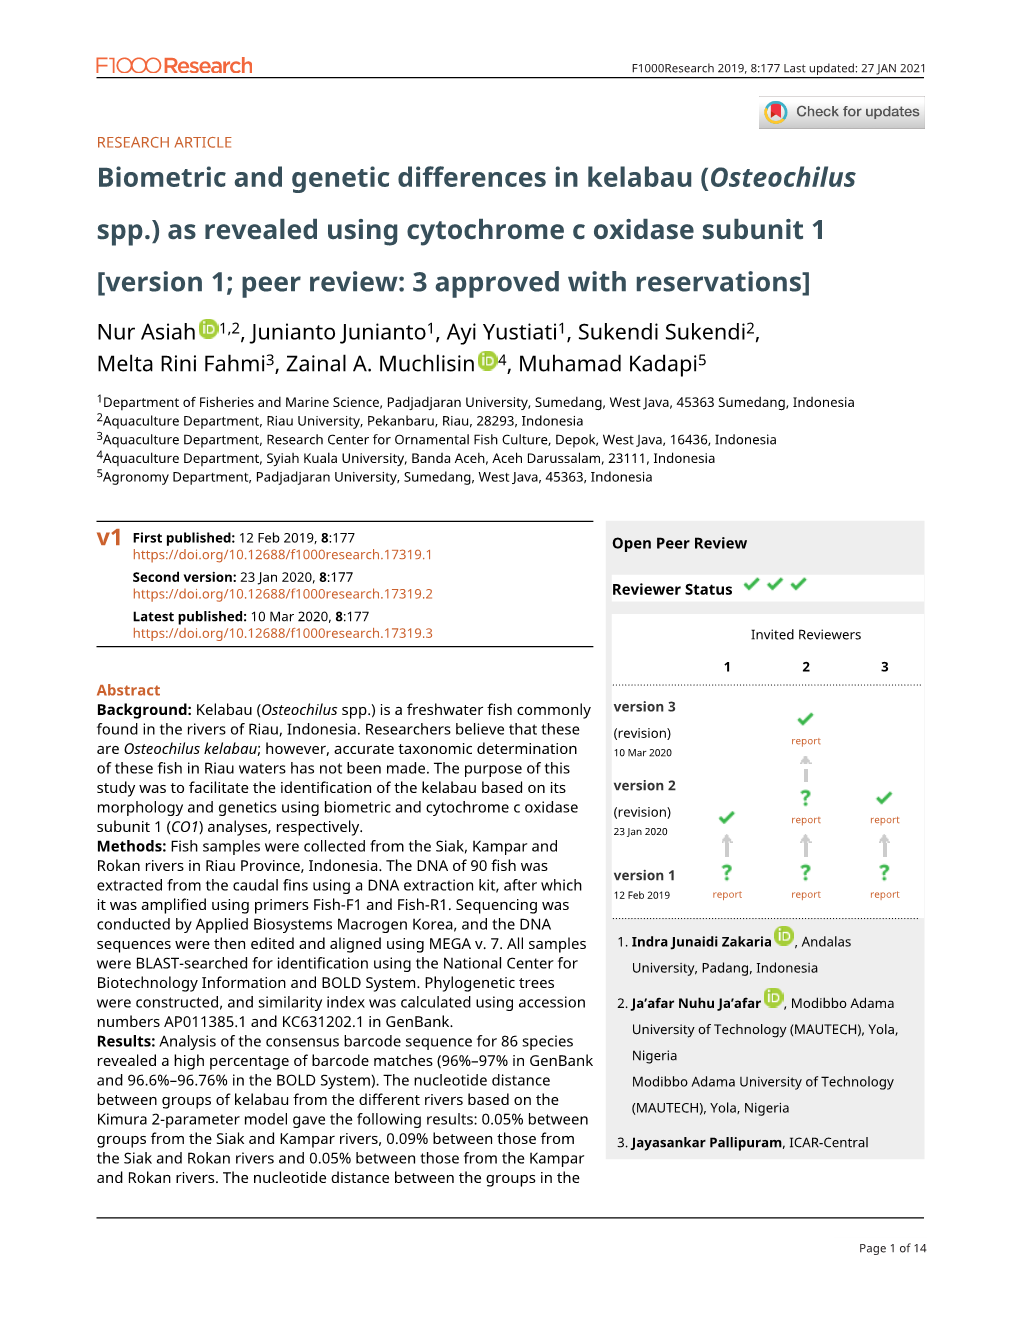 Biometric and Genetic Differences in Kelabau